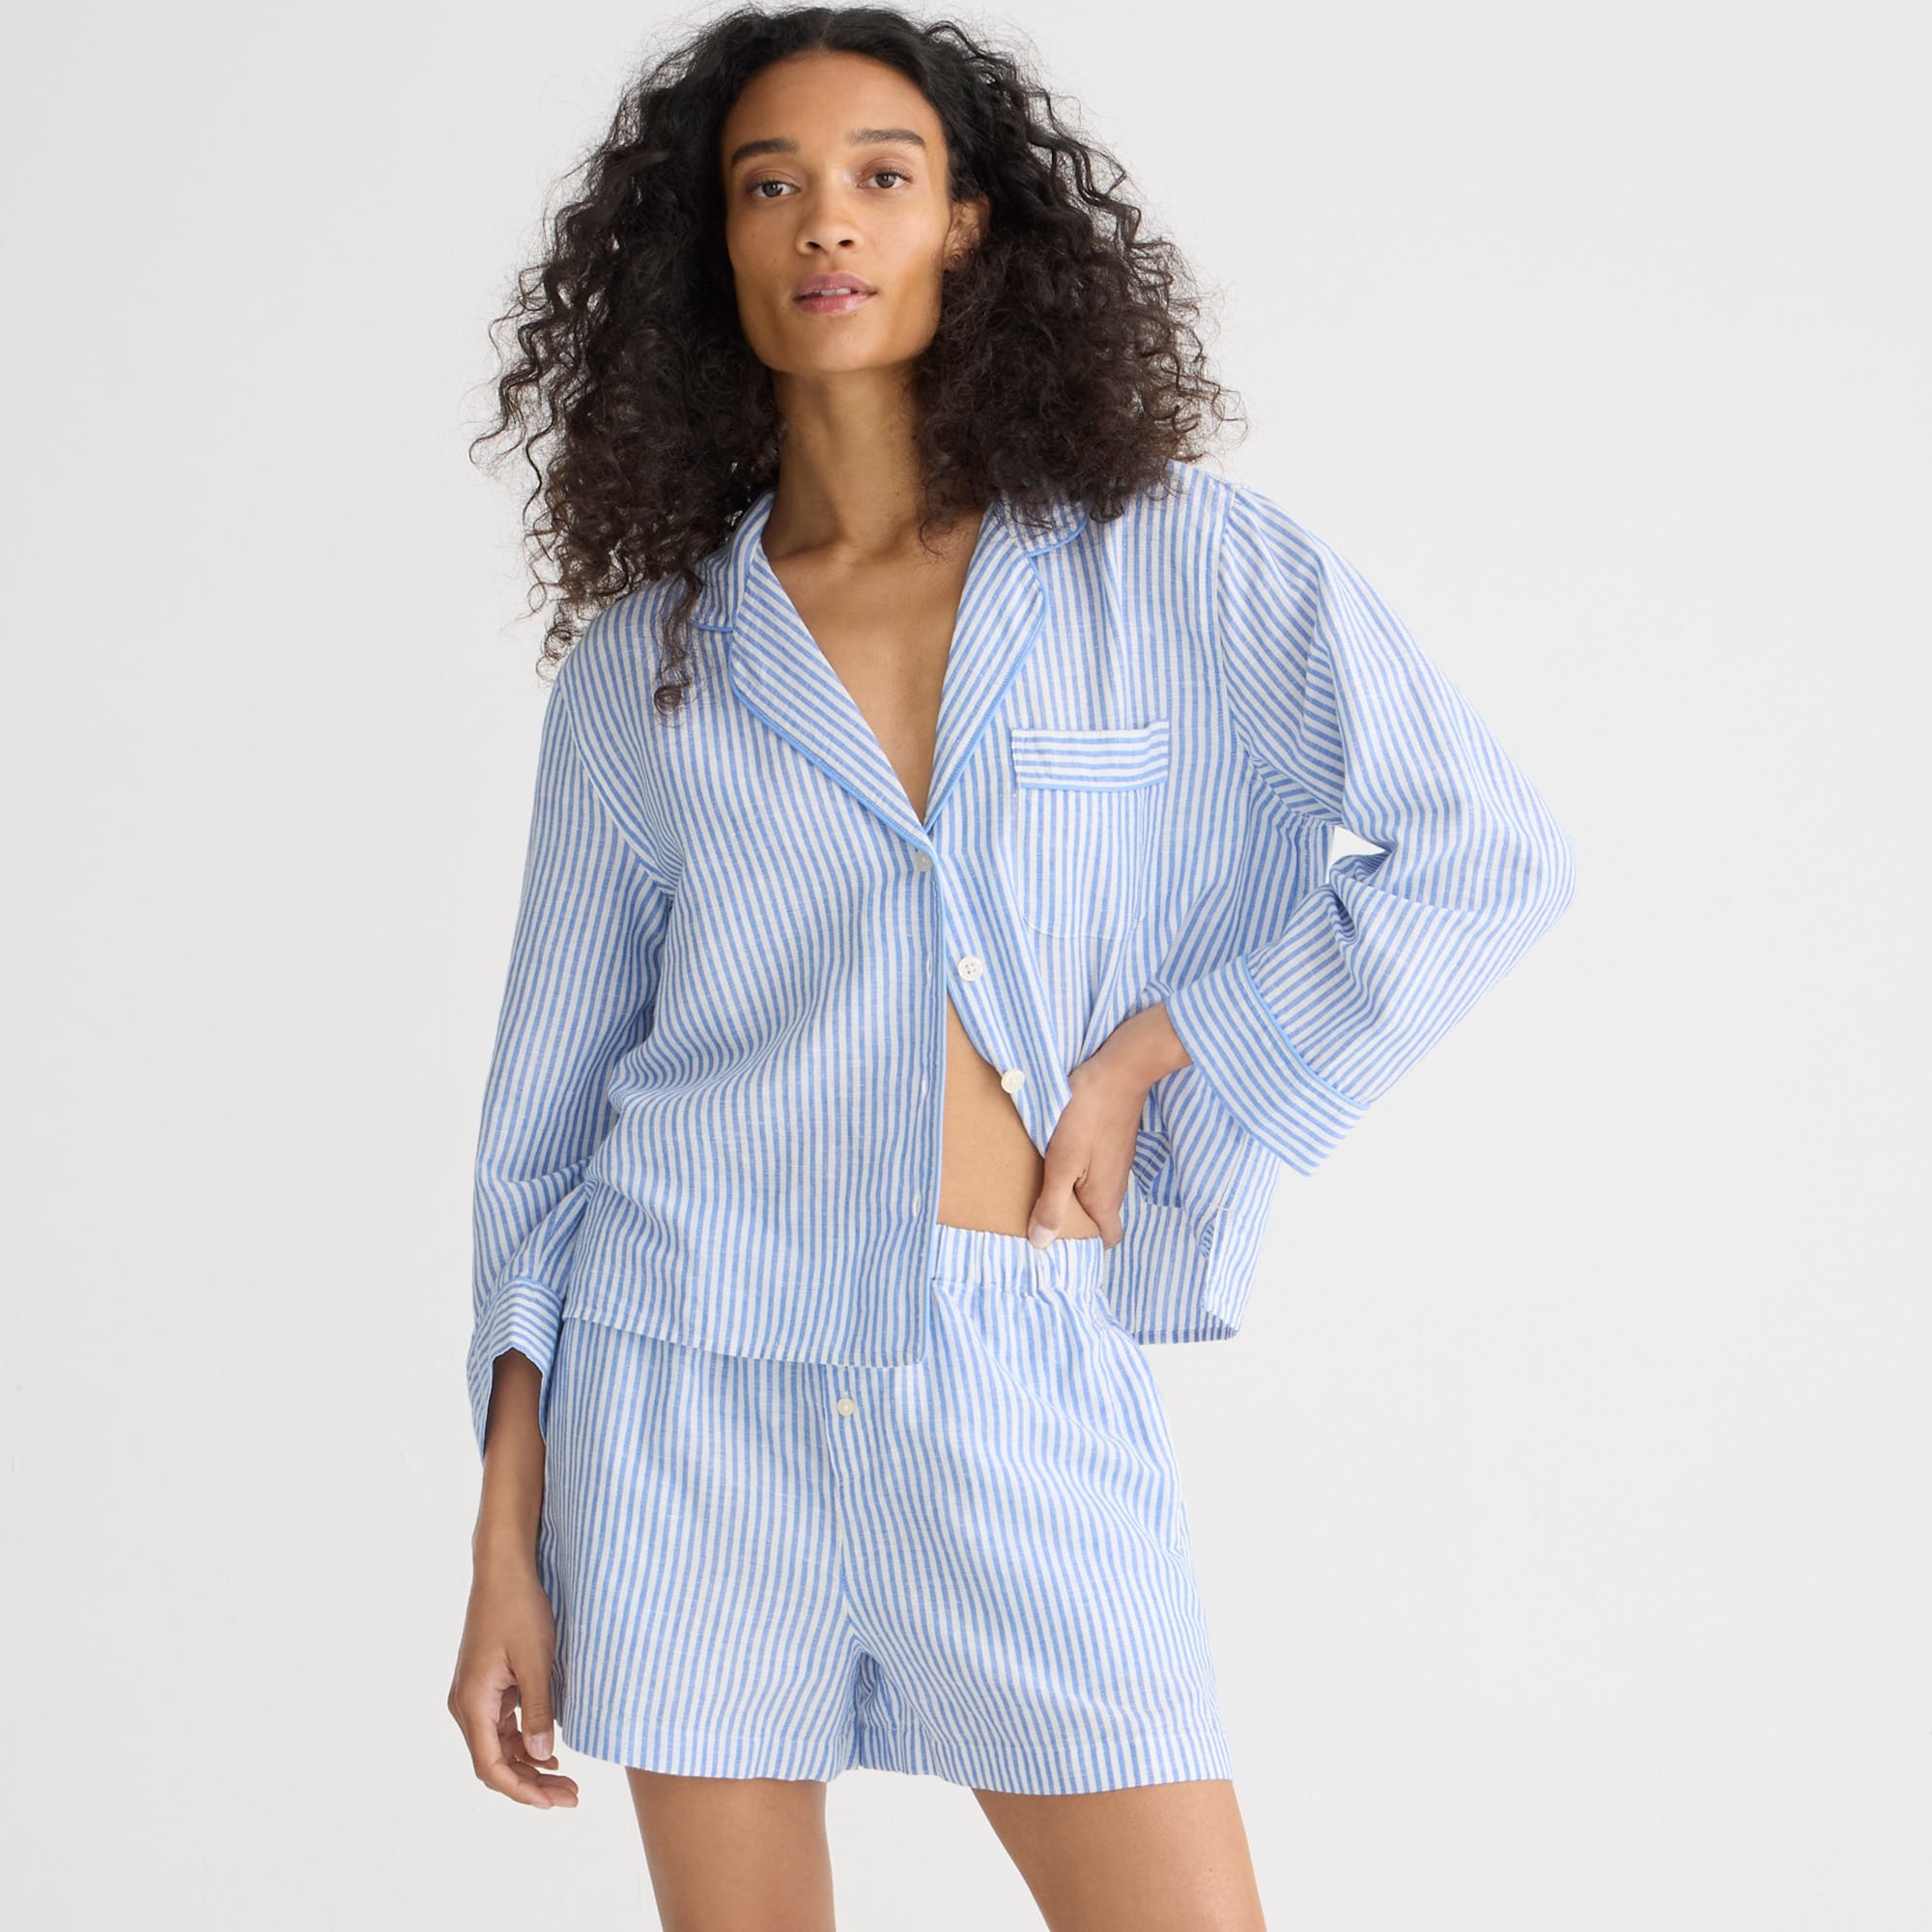  Long-sleeve pajama short set in striped linen-cotton blend